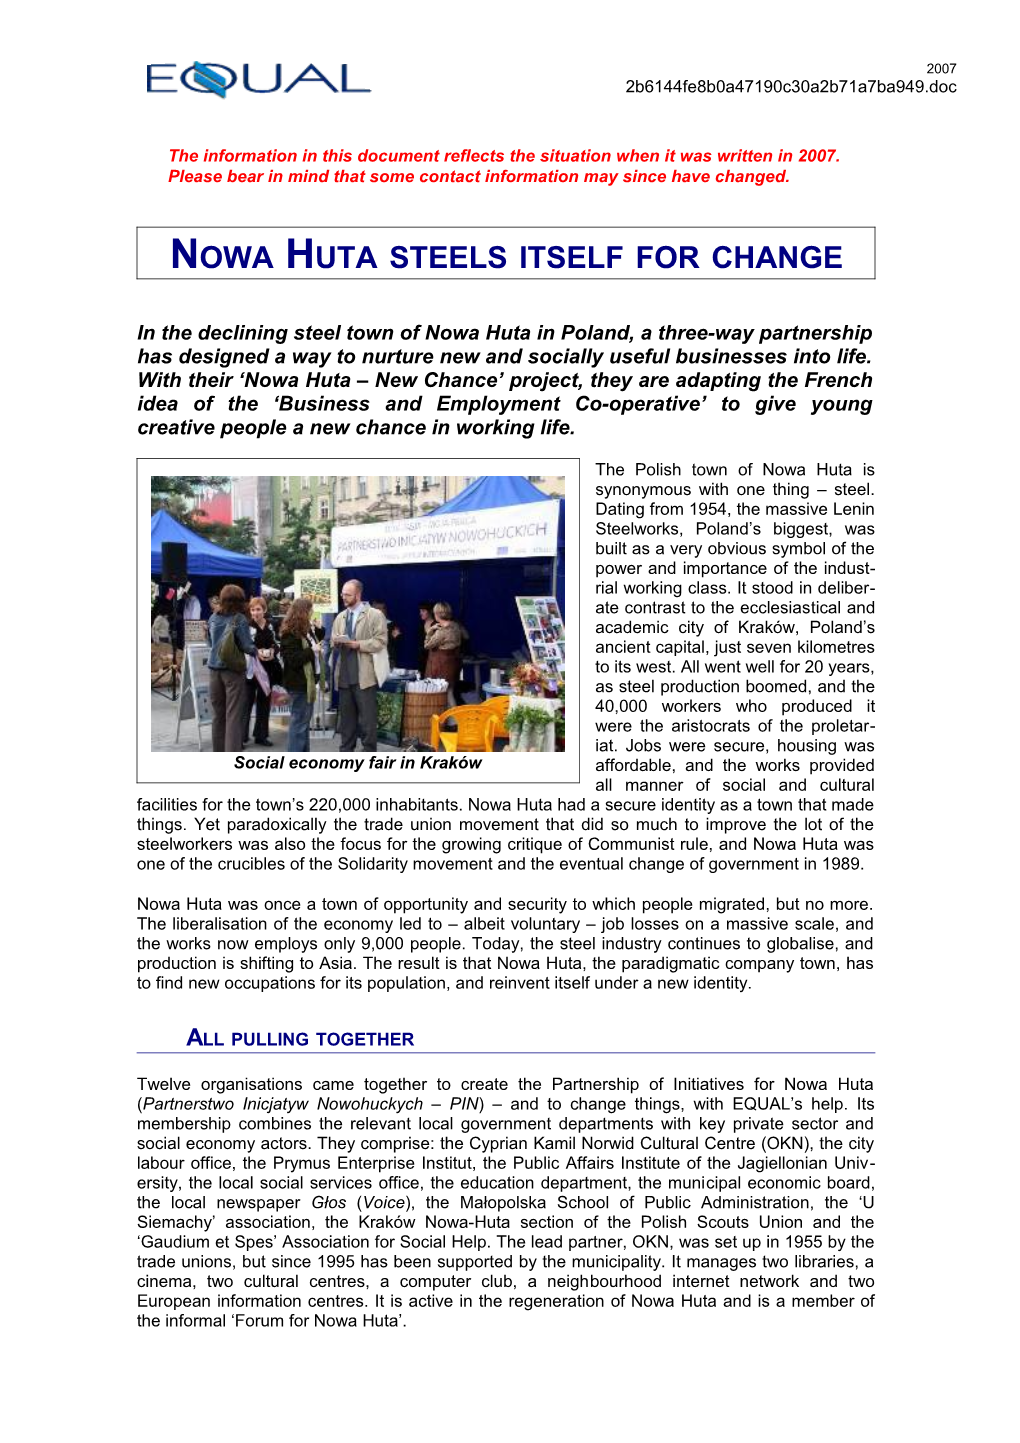 Poland: Nowa Huta - Partnership